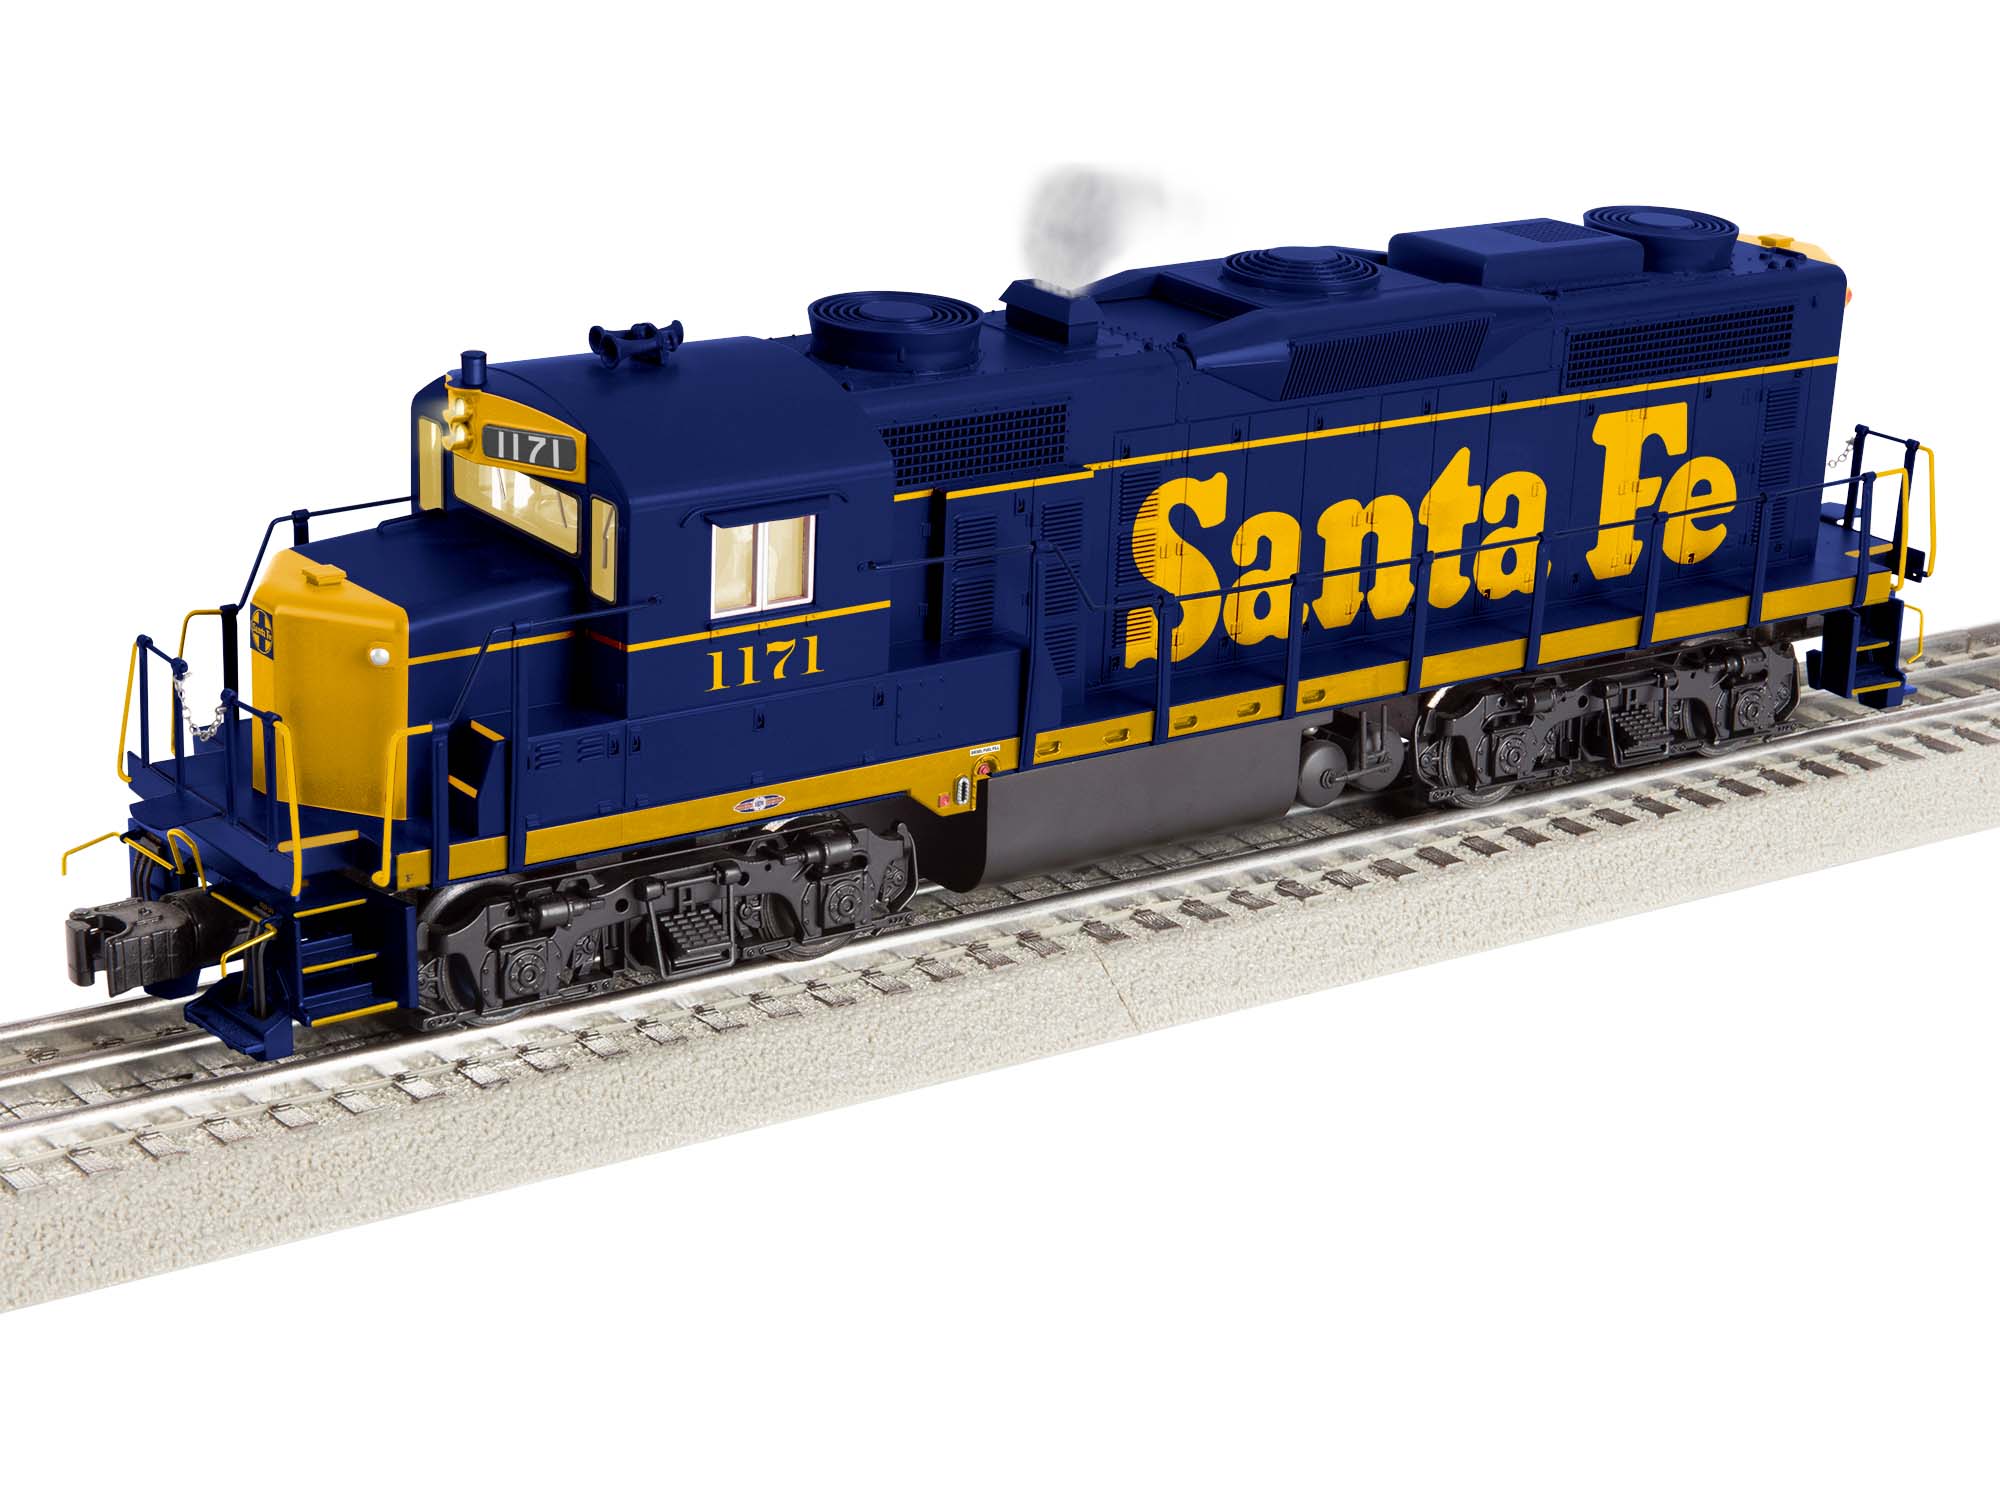 Lionel 2333552 - Legacy GP20 Diesel Locomotive "Santa Fe" #1171